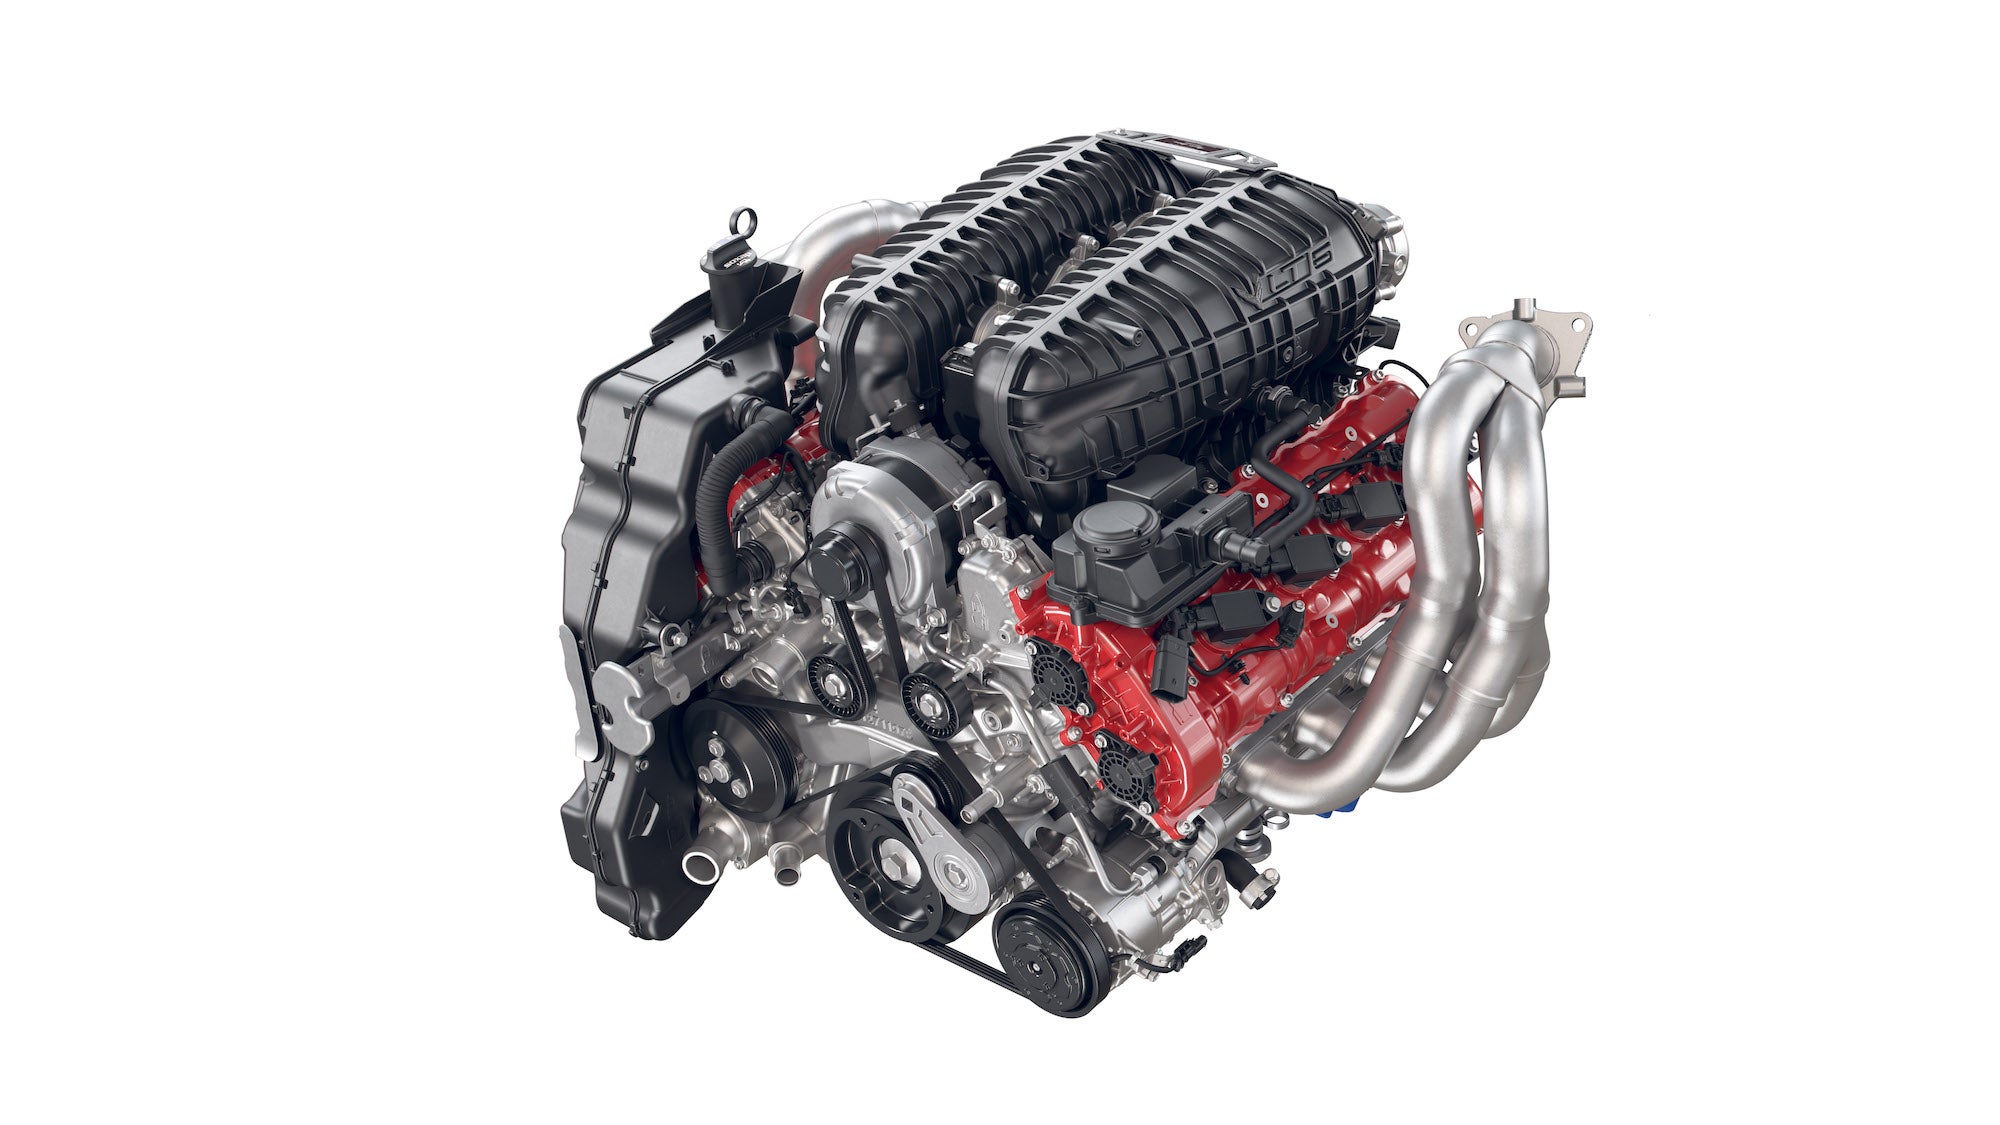 The Corvette Z06's engine.